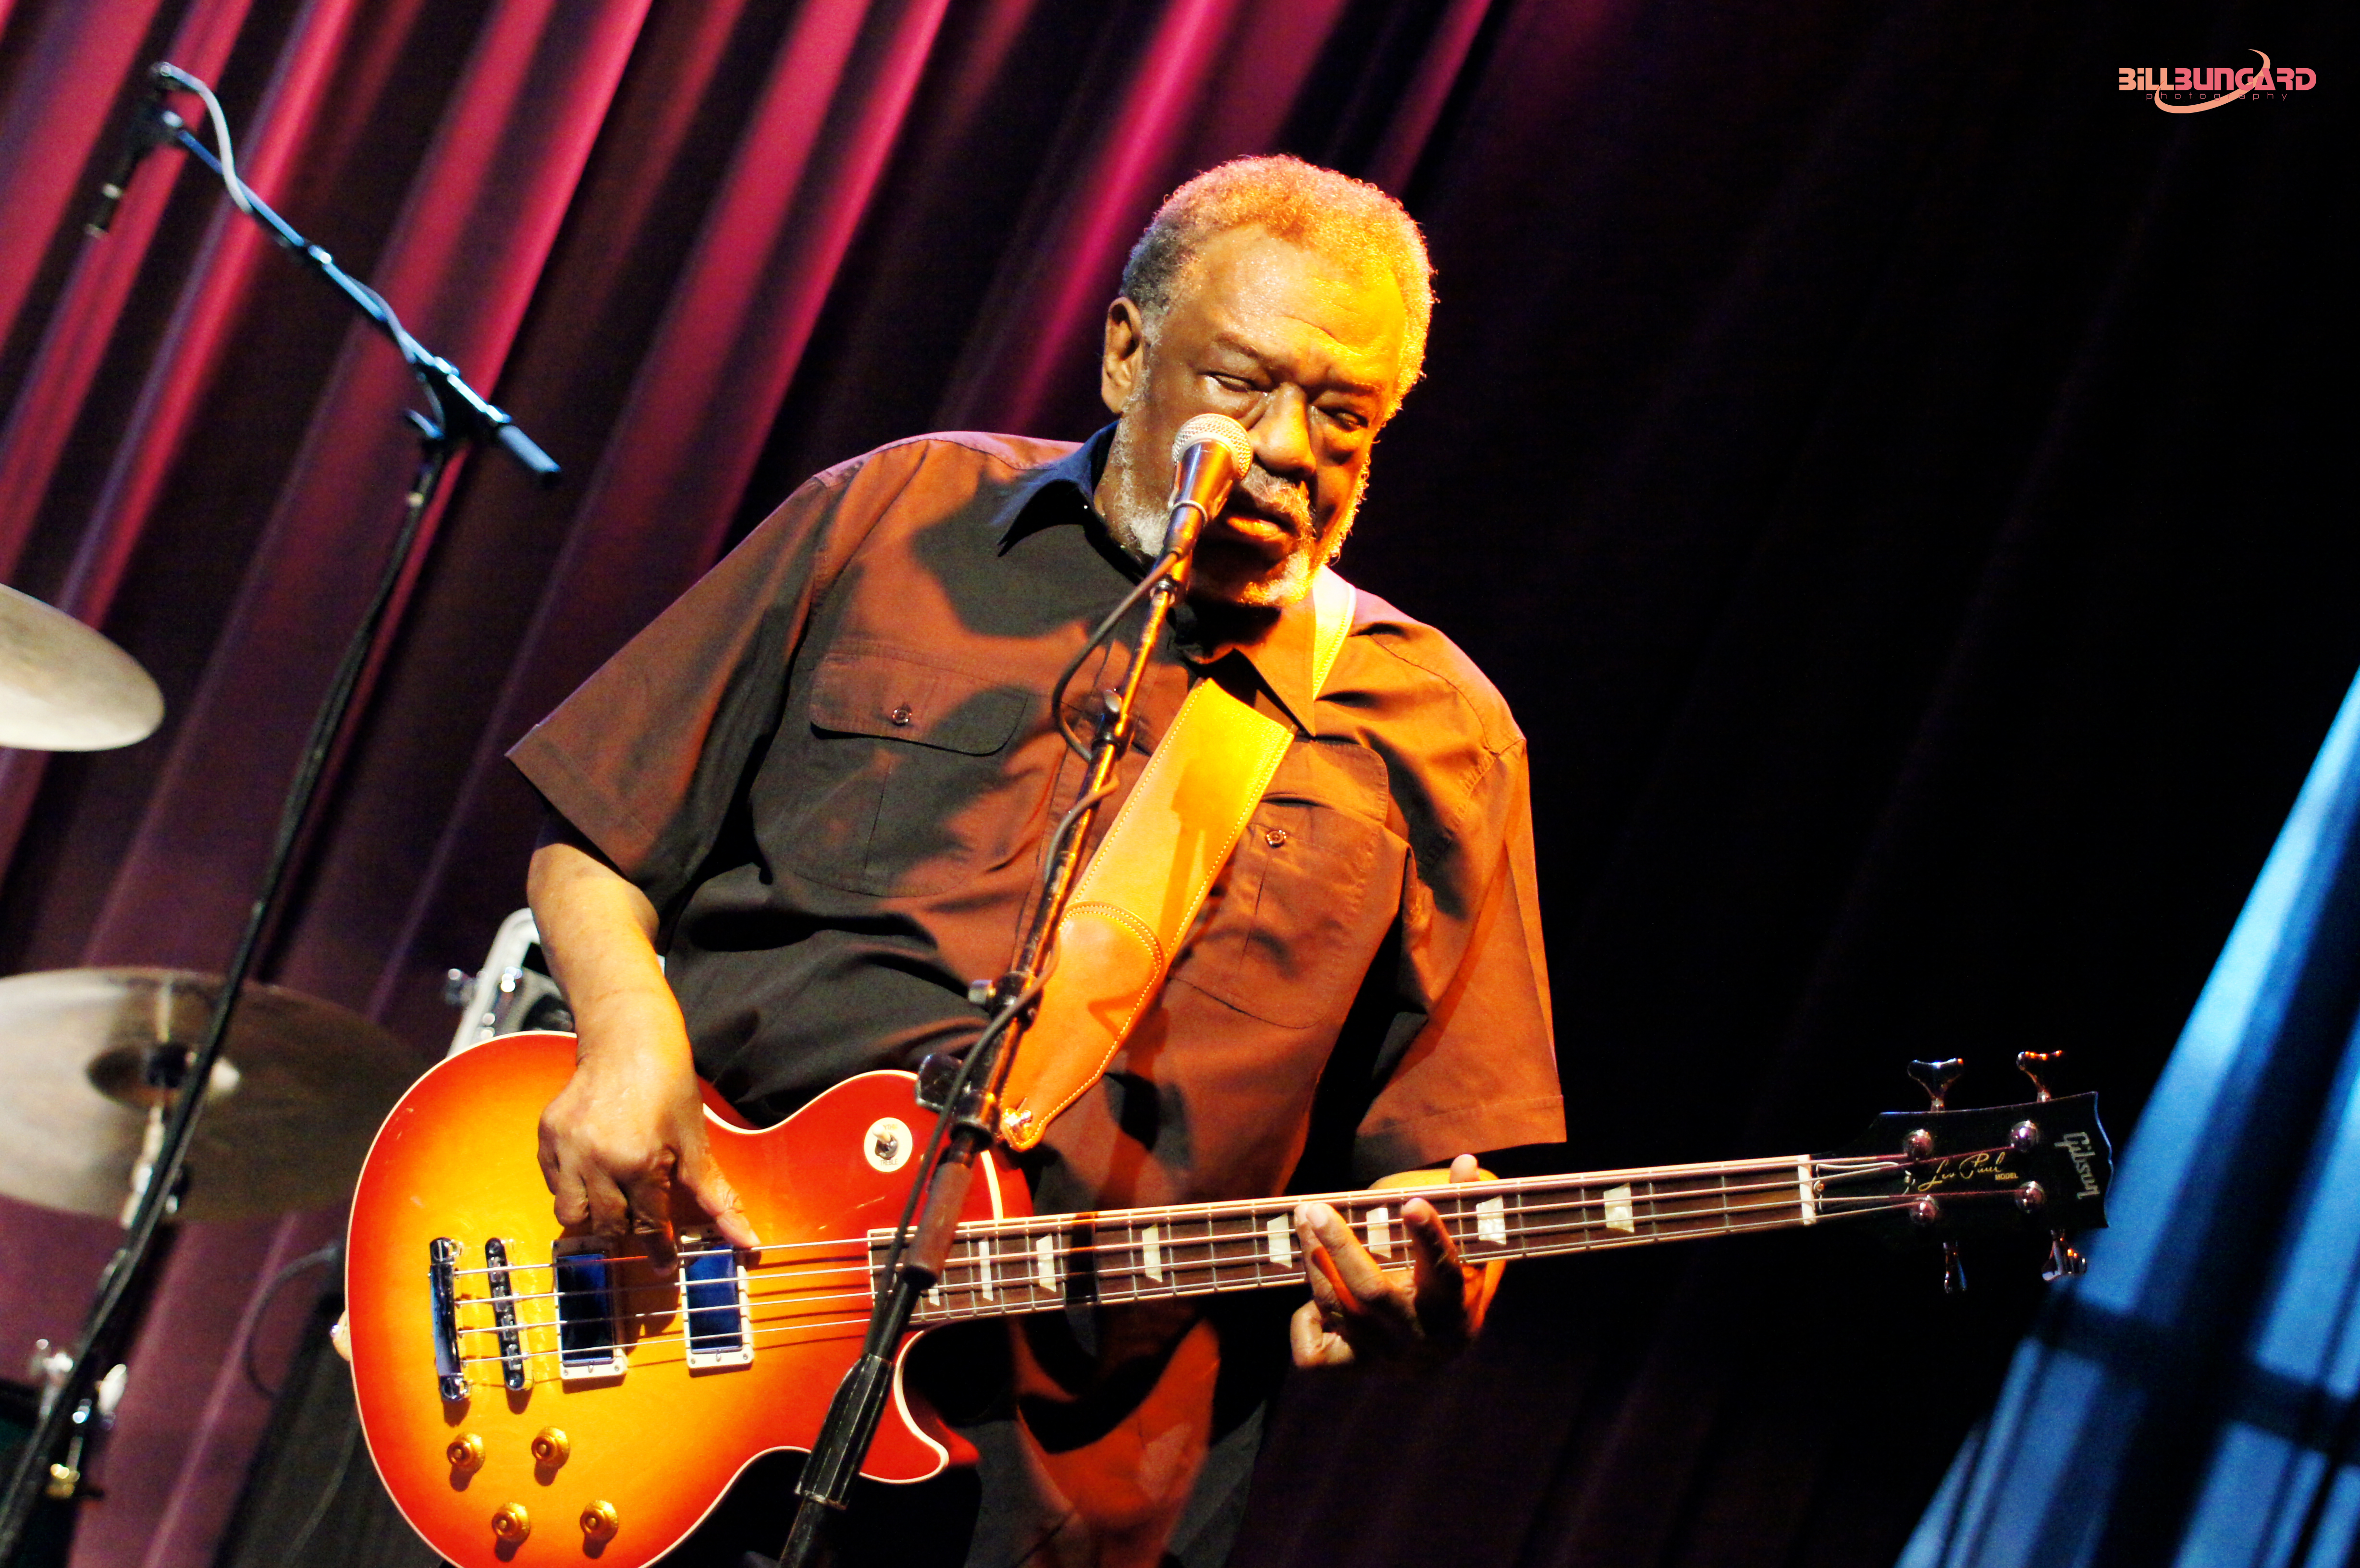 Sherman Holmes at Jazz Alley (Photo by Bill Bungard)